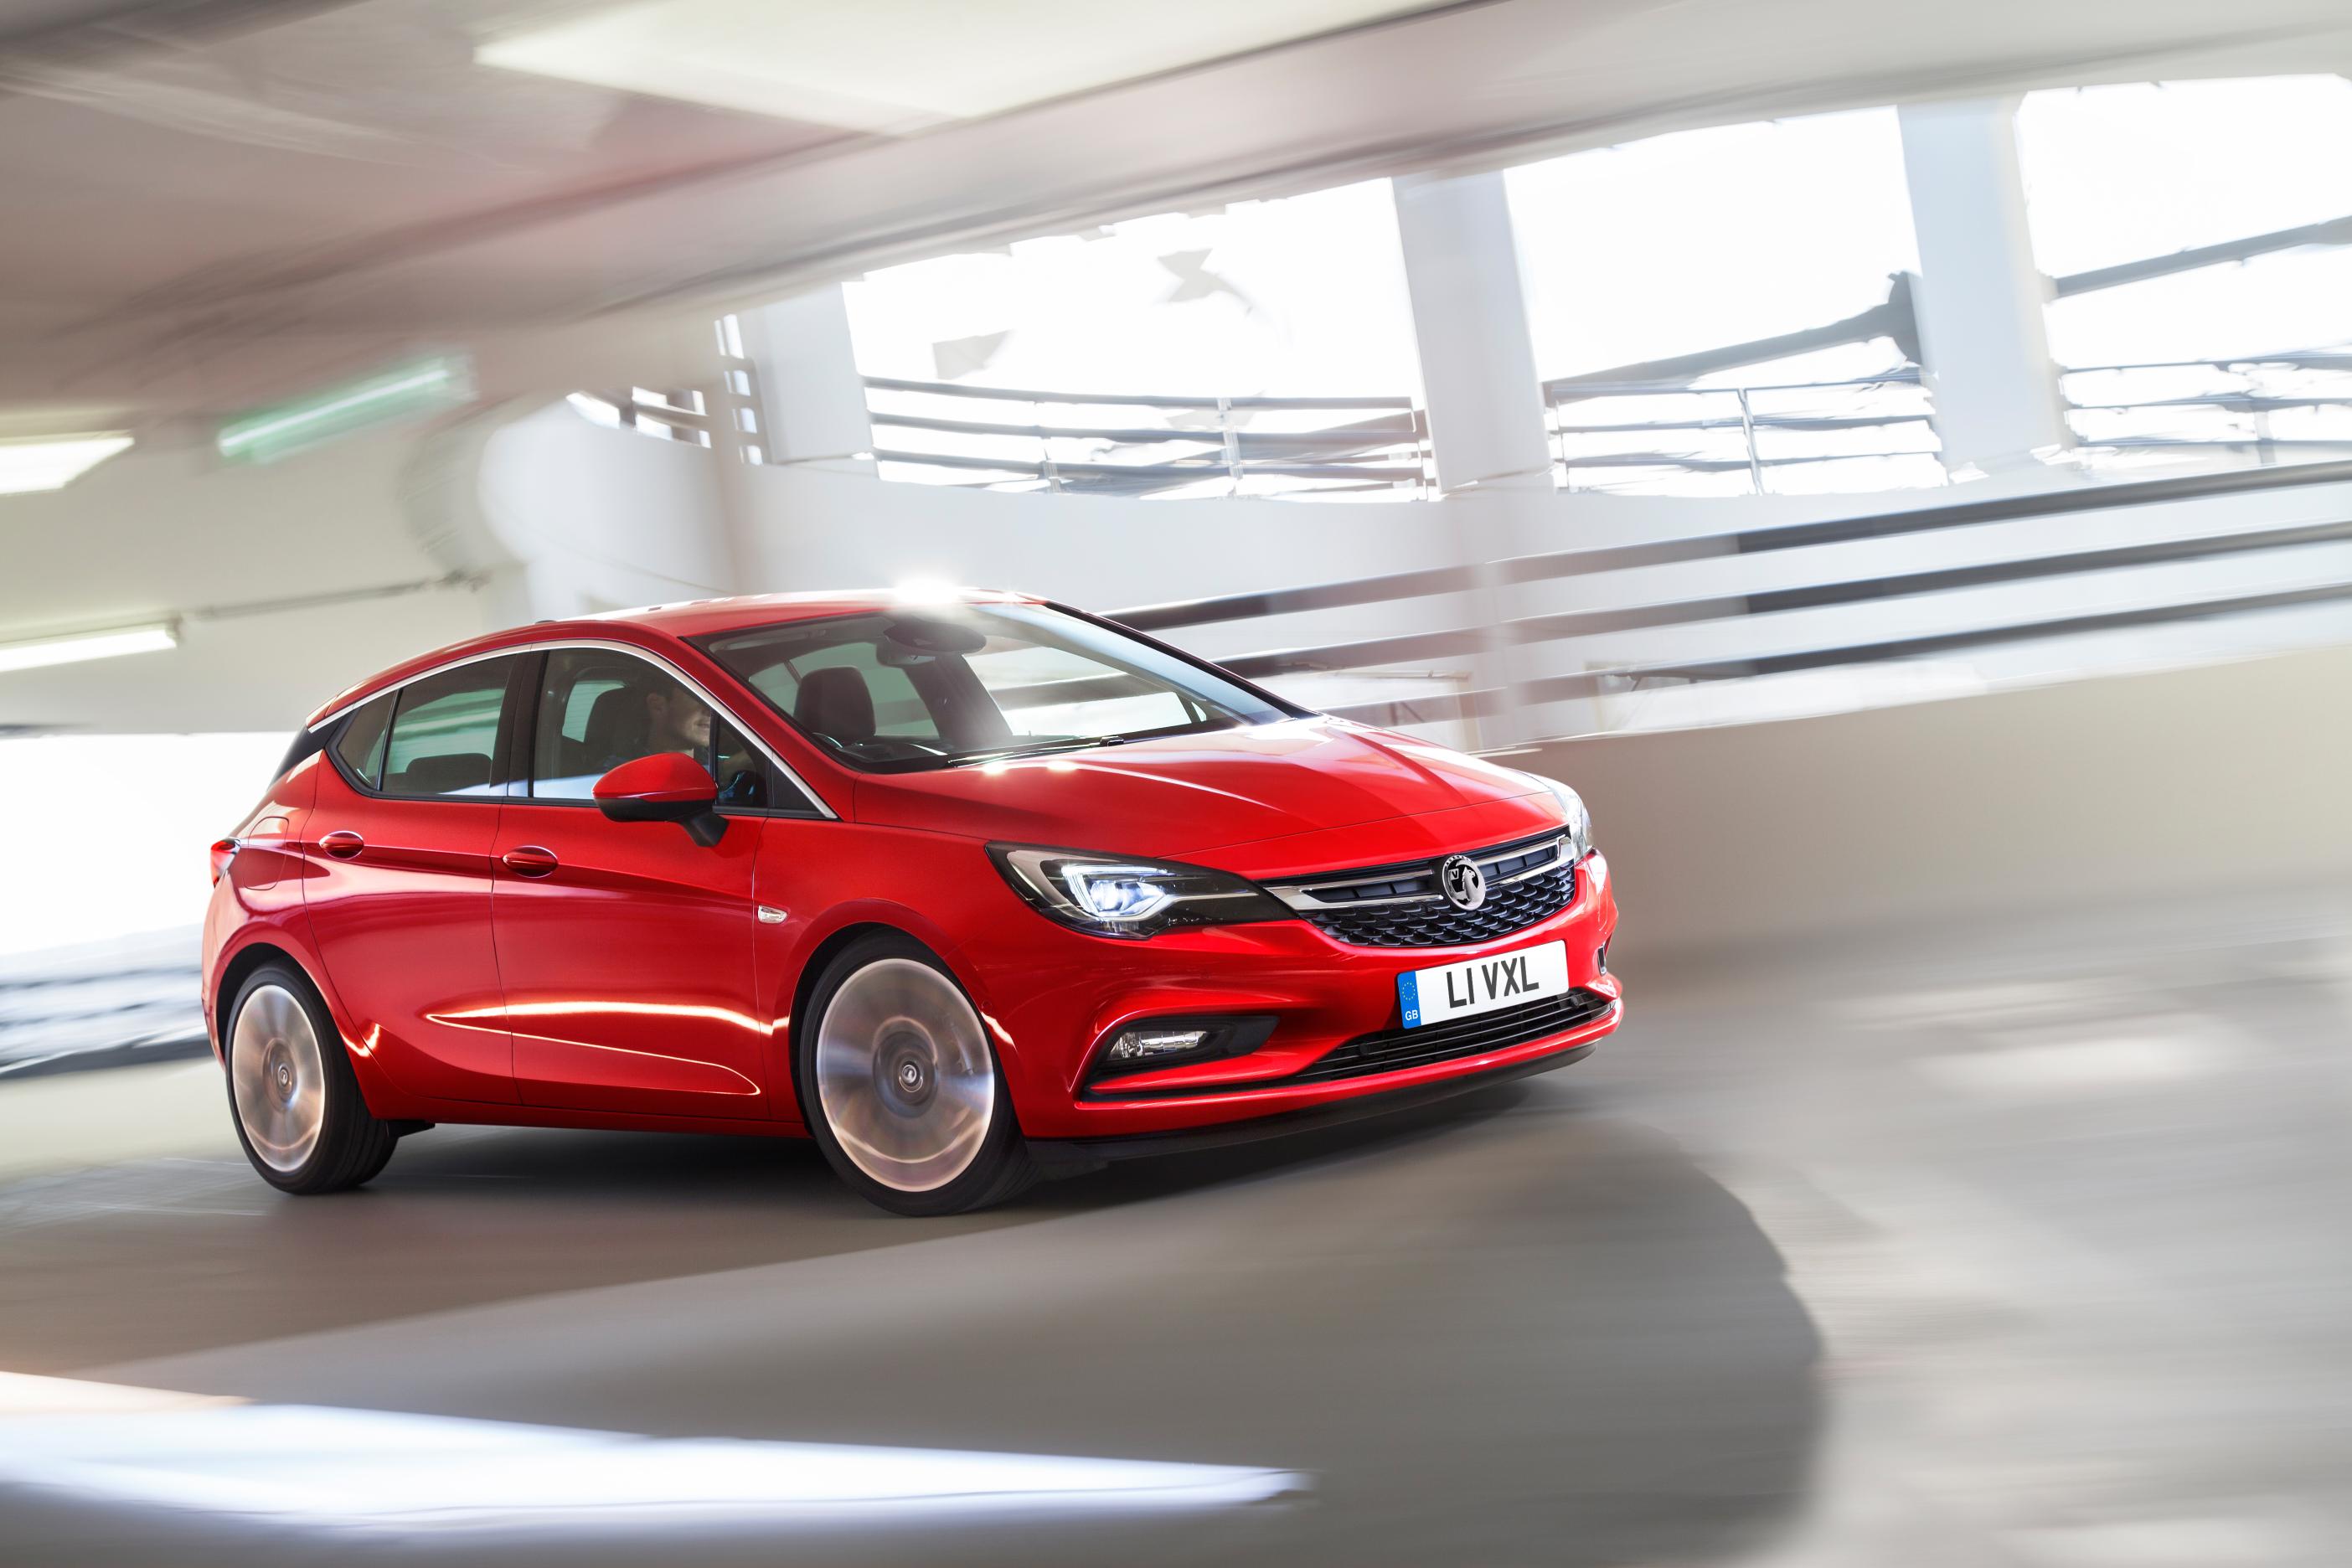 2015 Opel Astra Price: €17,960 for the 1-liter ECOTEC Turbo - autoevolution